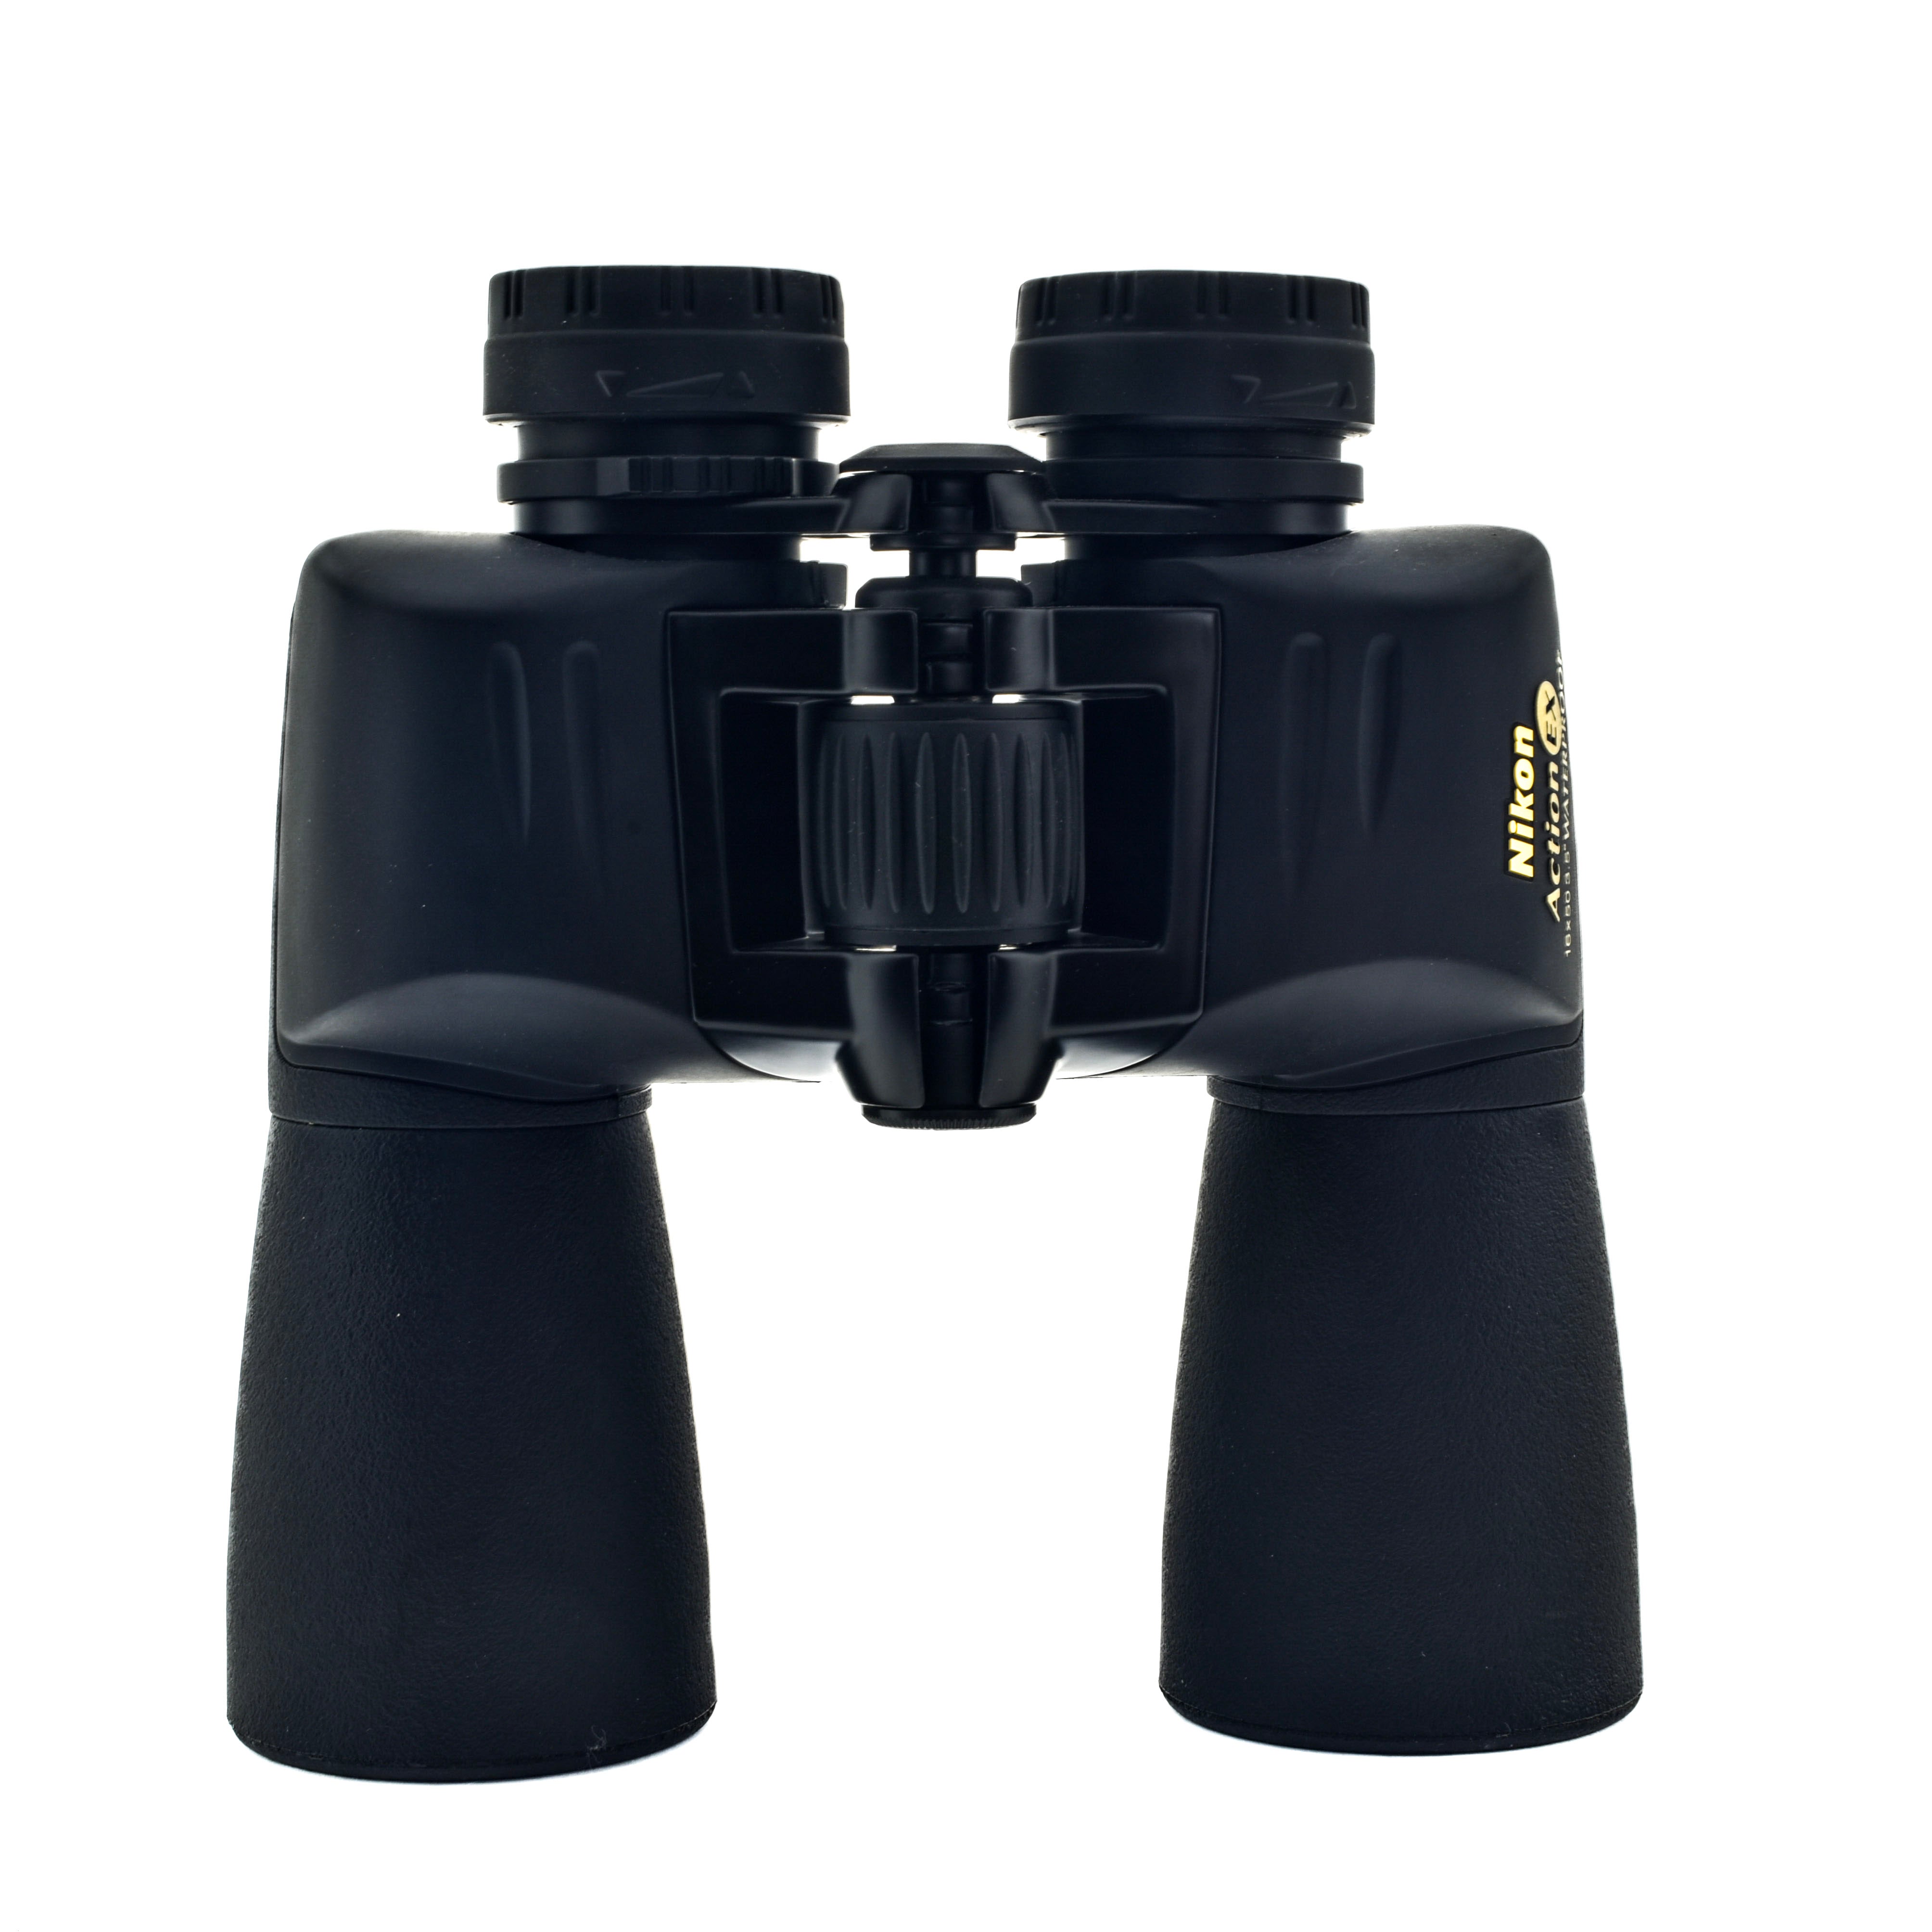 Nikon Action EX 16x50 CF Binoculars (Black)